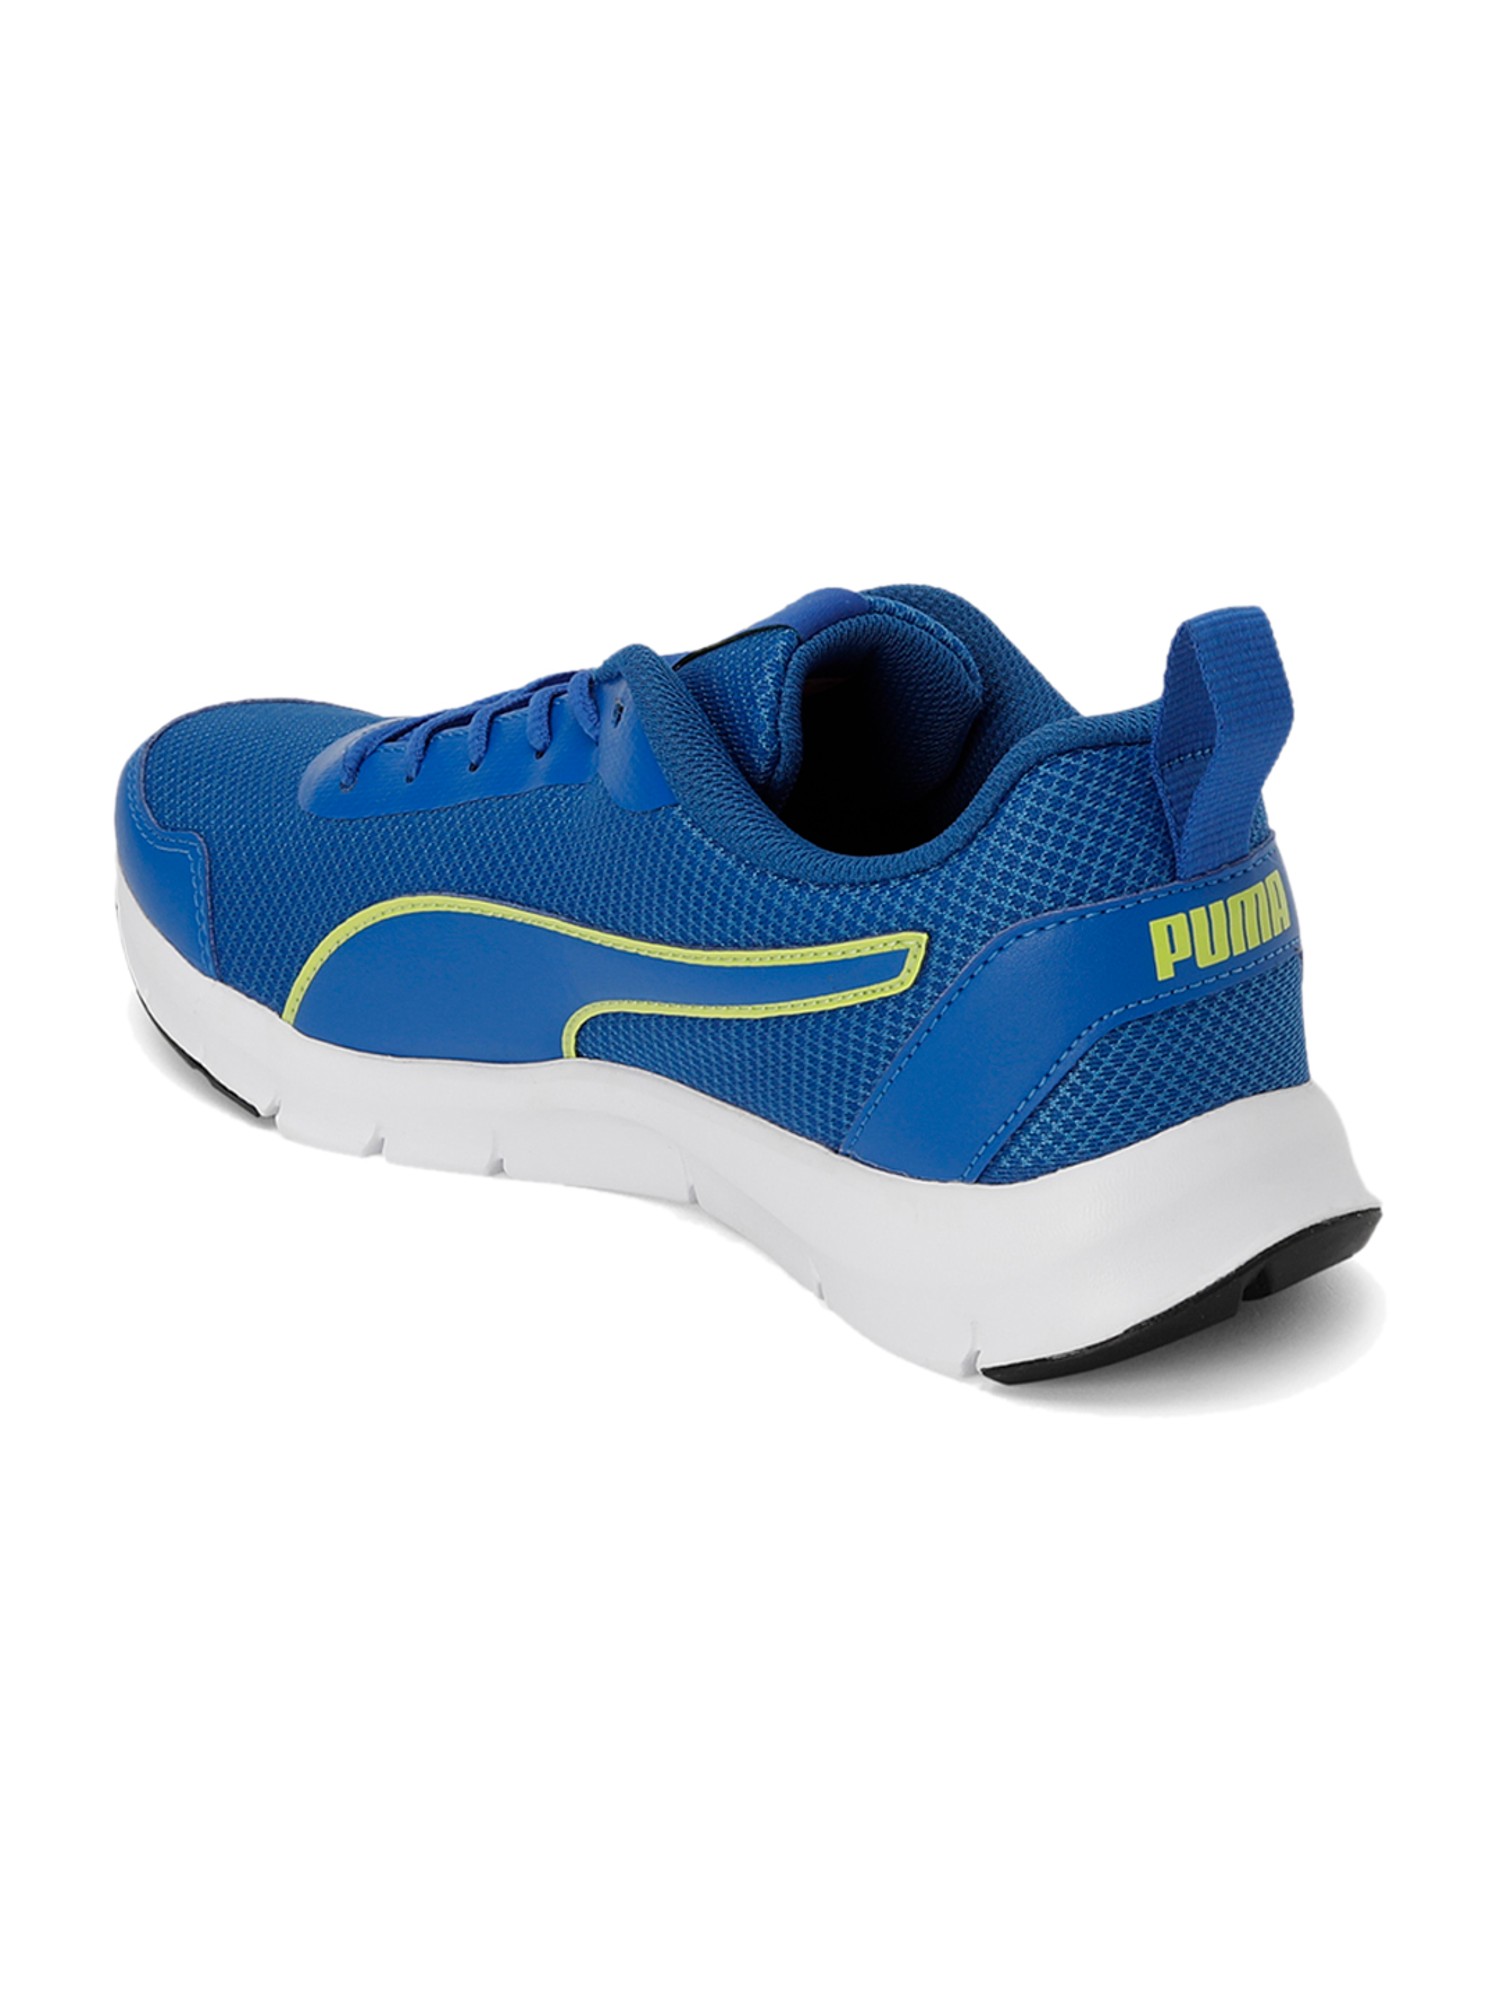 Buy Blue Sports Shoes for Men by Puma Online | Ajio.com